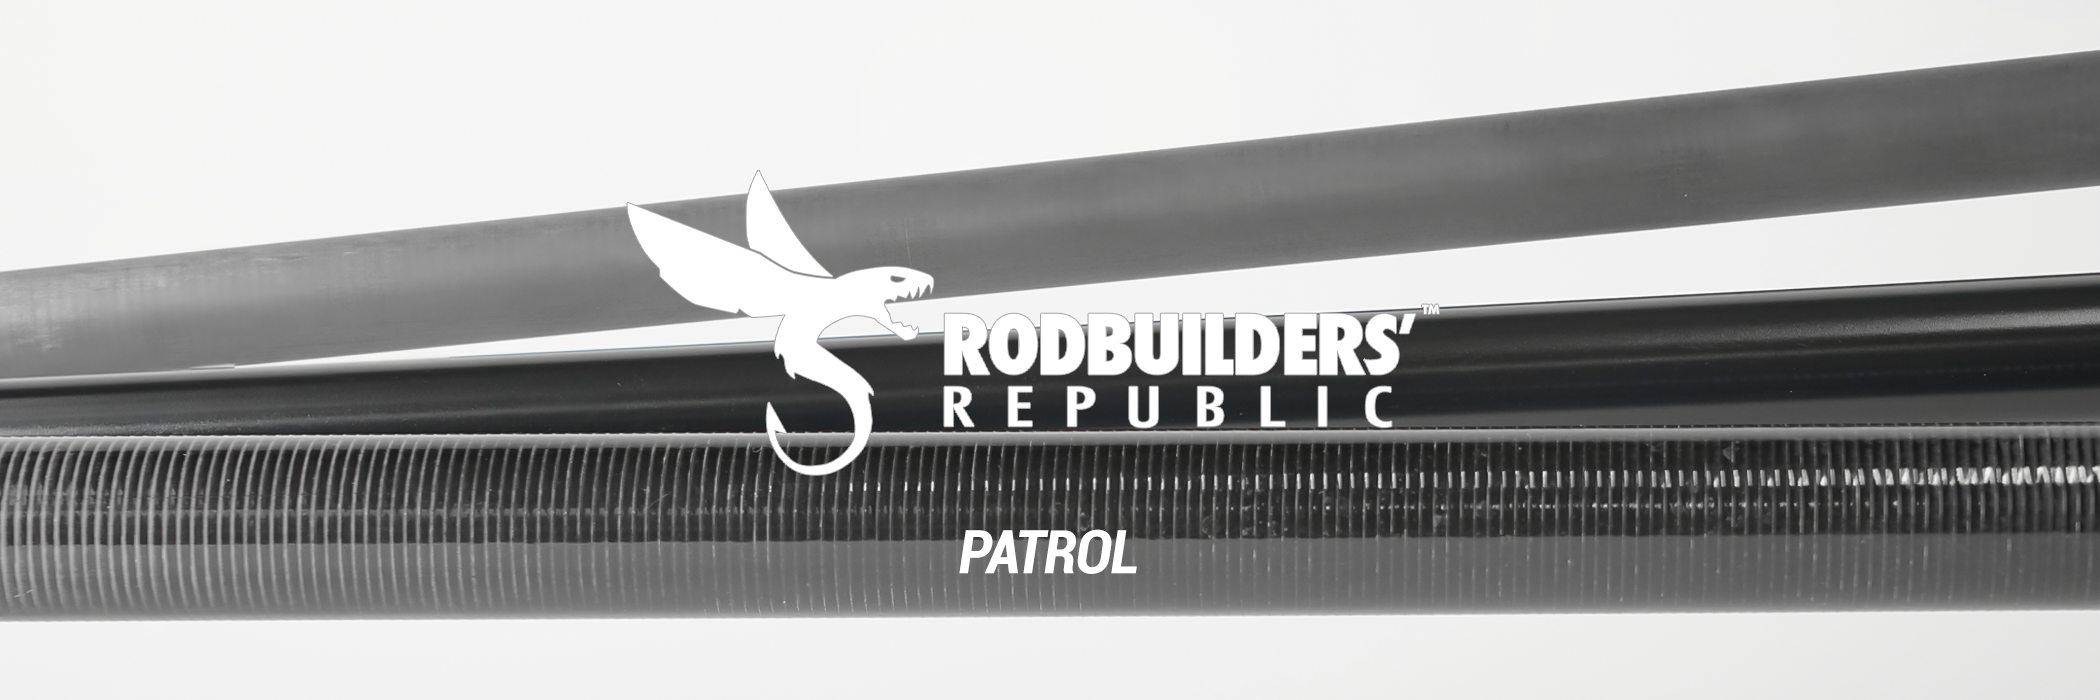 Rodbuilders' Republic - Patrol